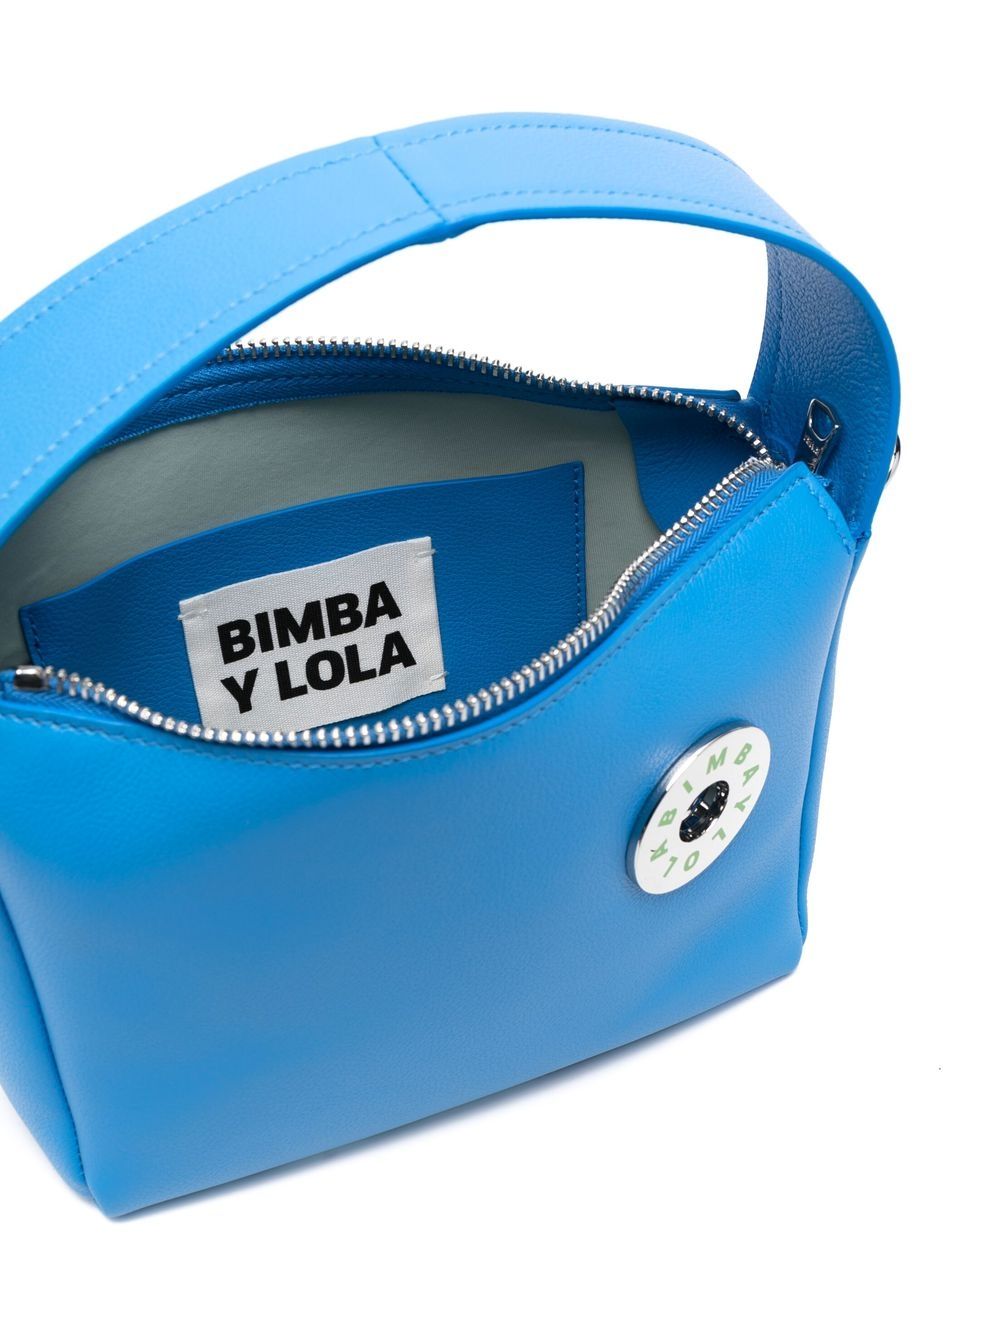 Bimba Y Lola Handbag - aqua/blue 